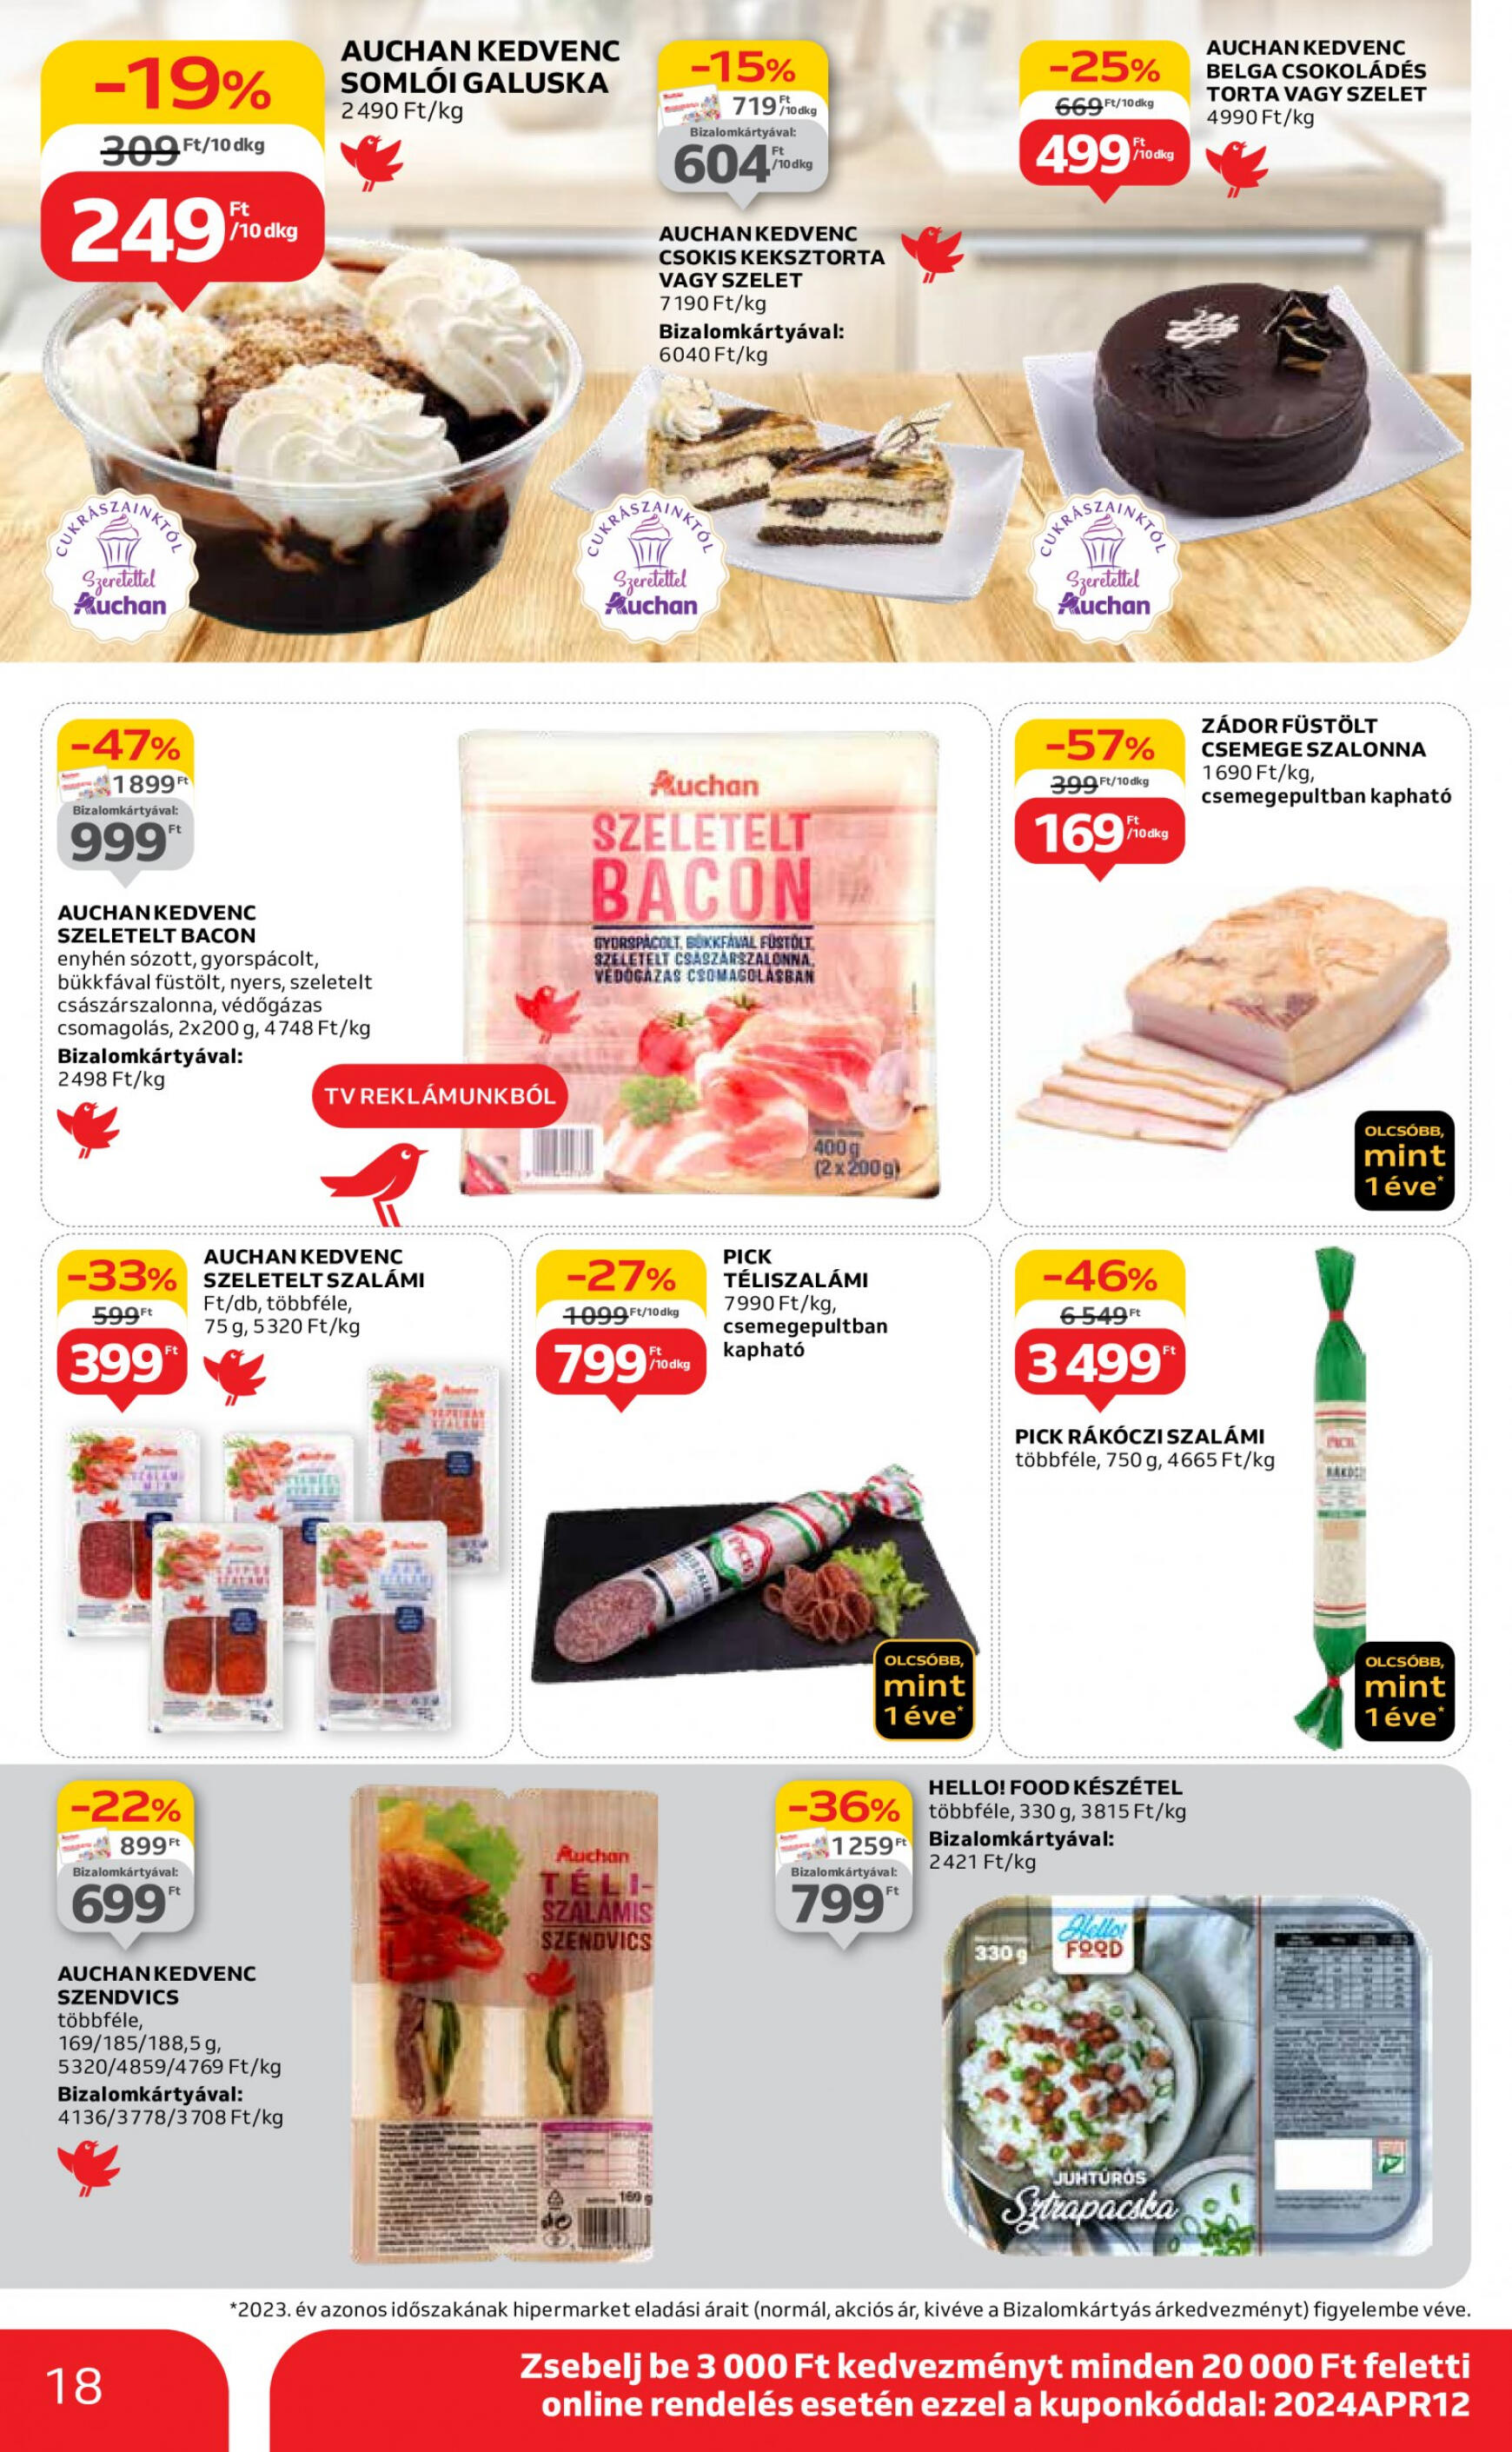 auchan - Aktuális újság Auchan 04.18. - 04.24. - page: 18